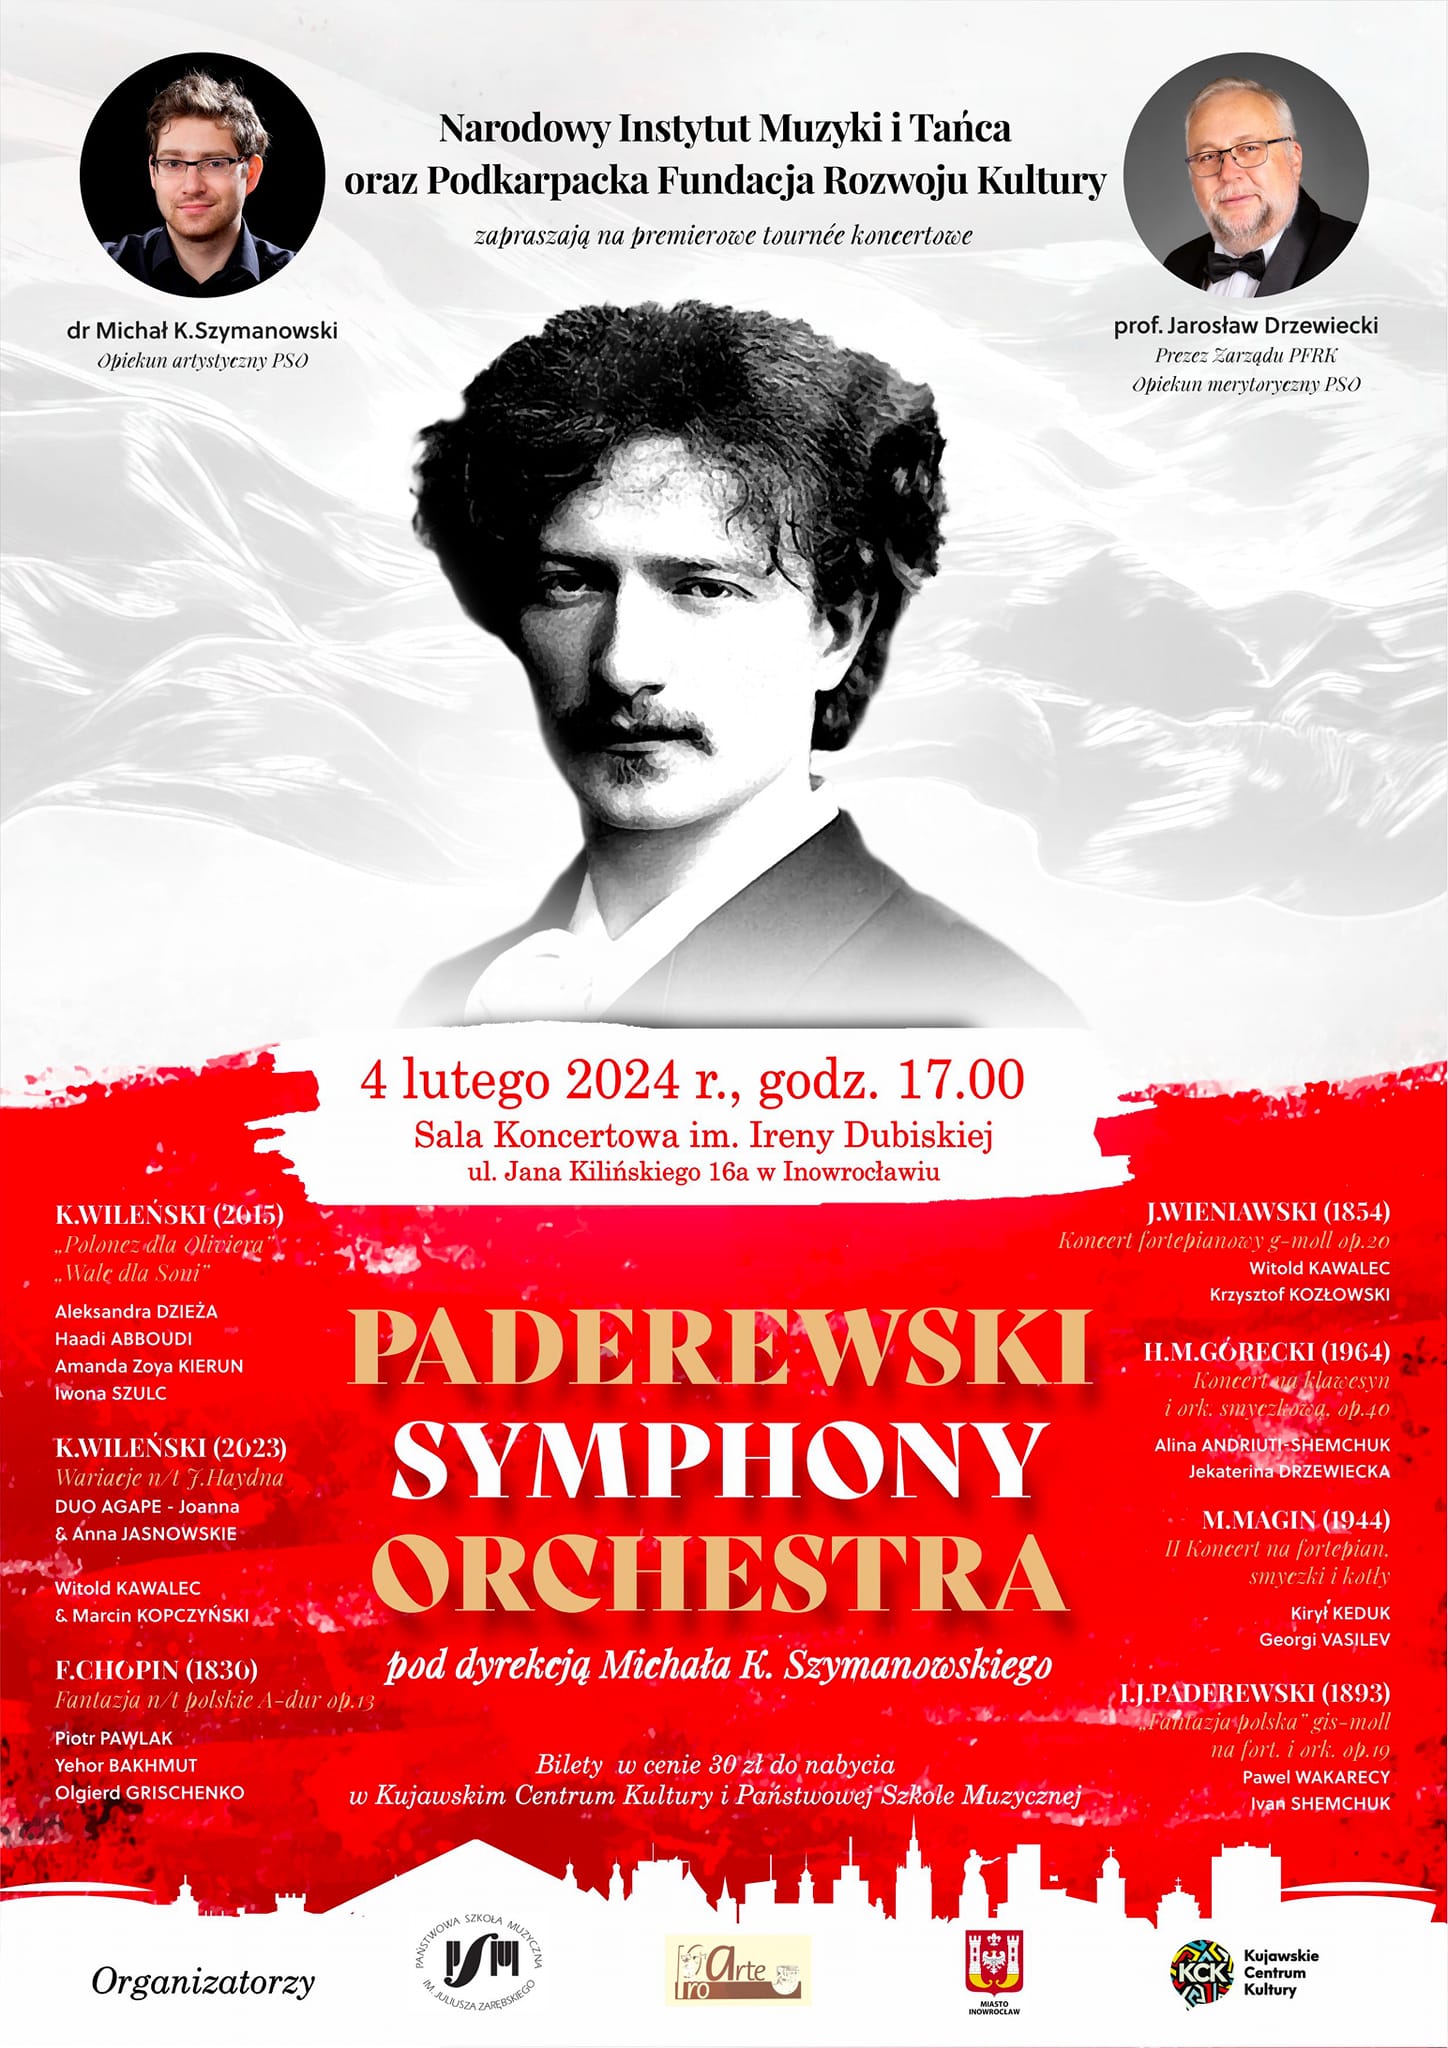 Paderewski Orkiestra